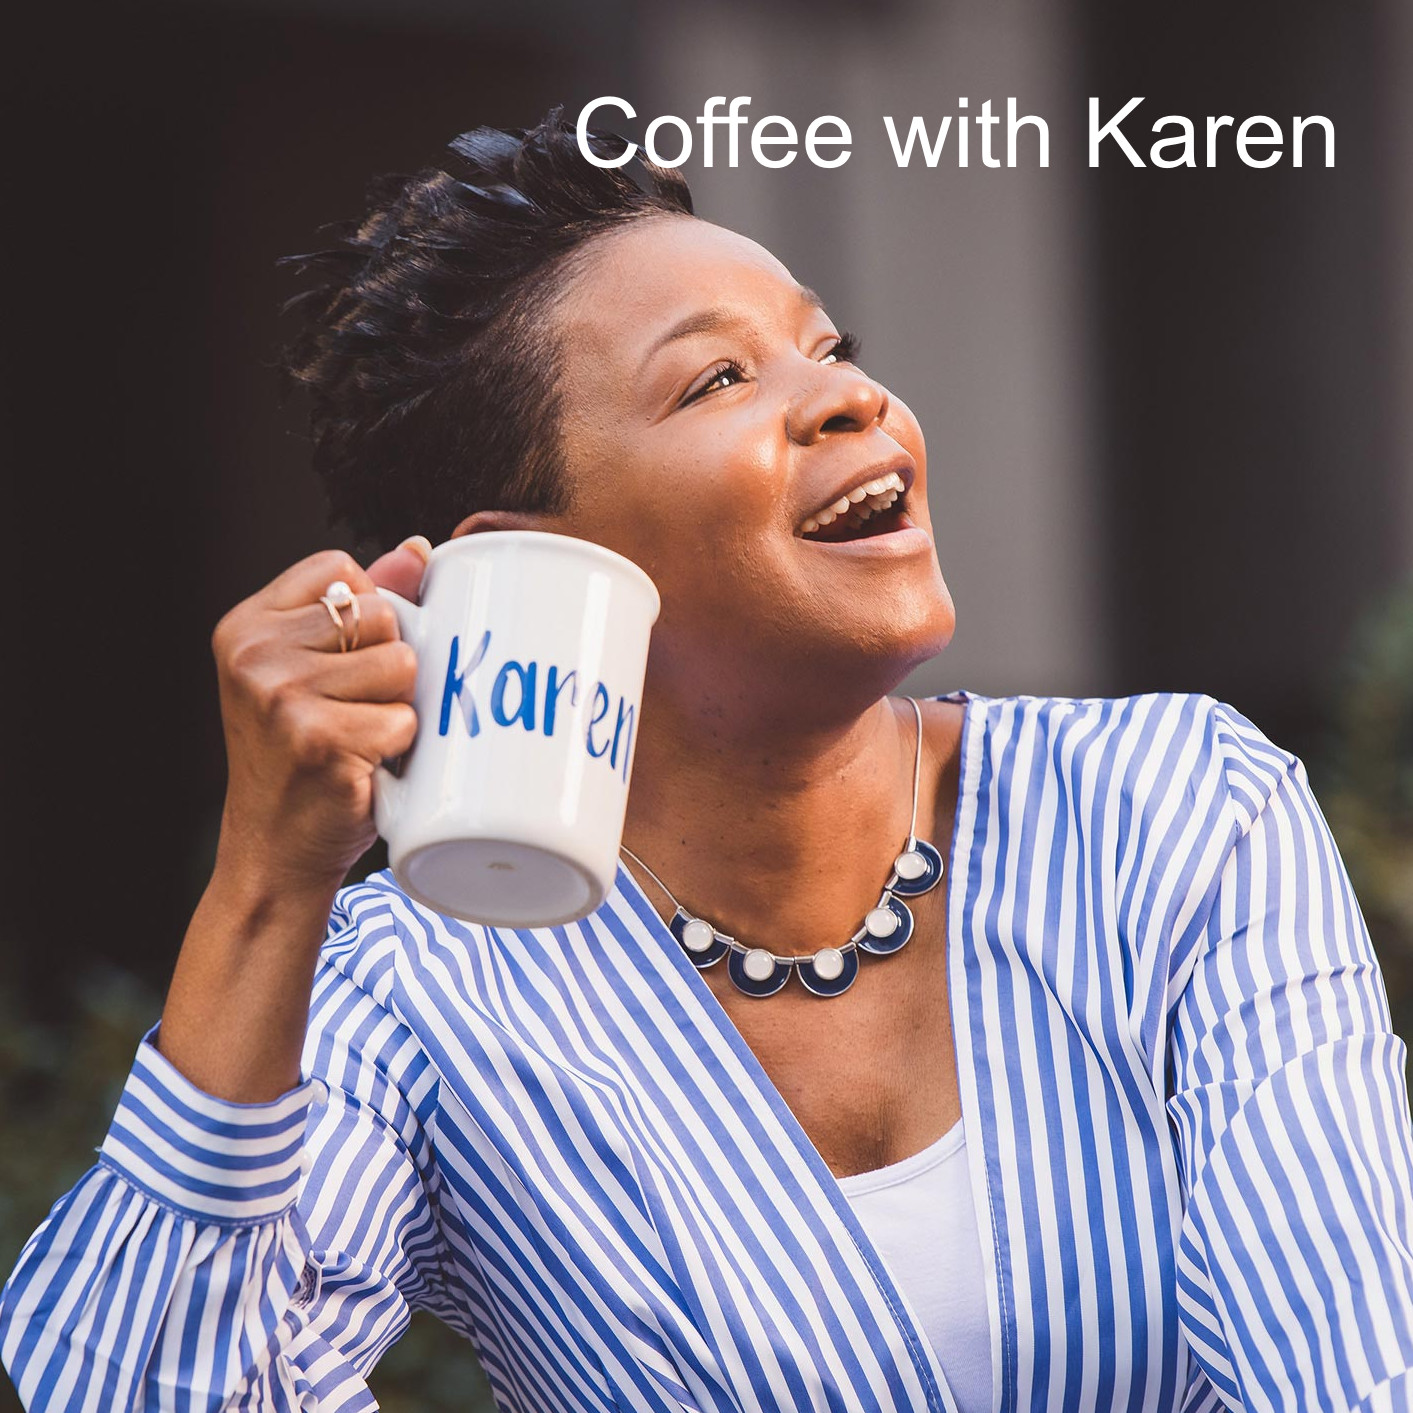 Coffee with Karen